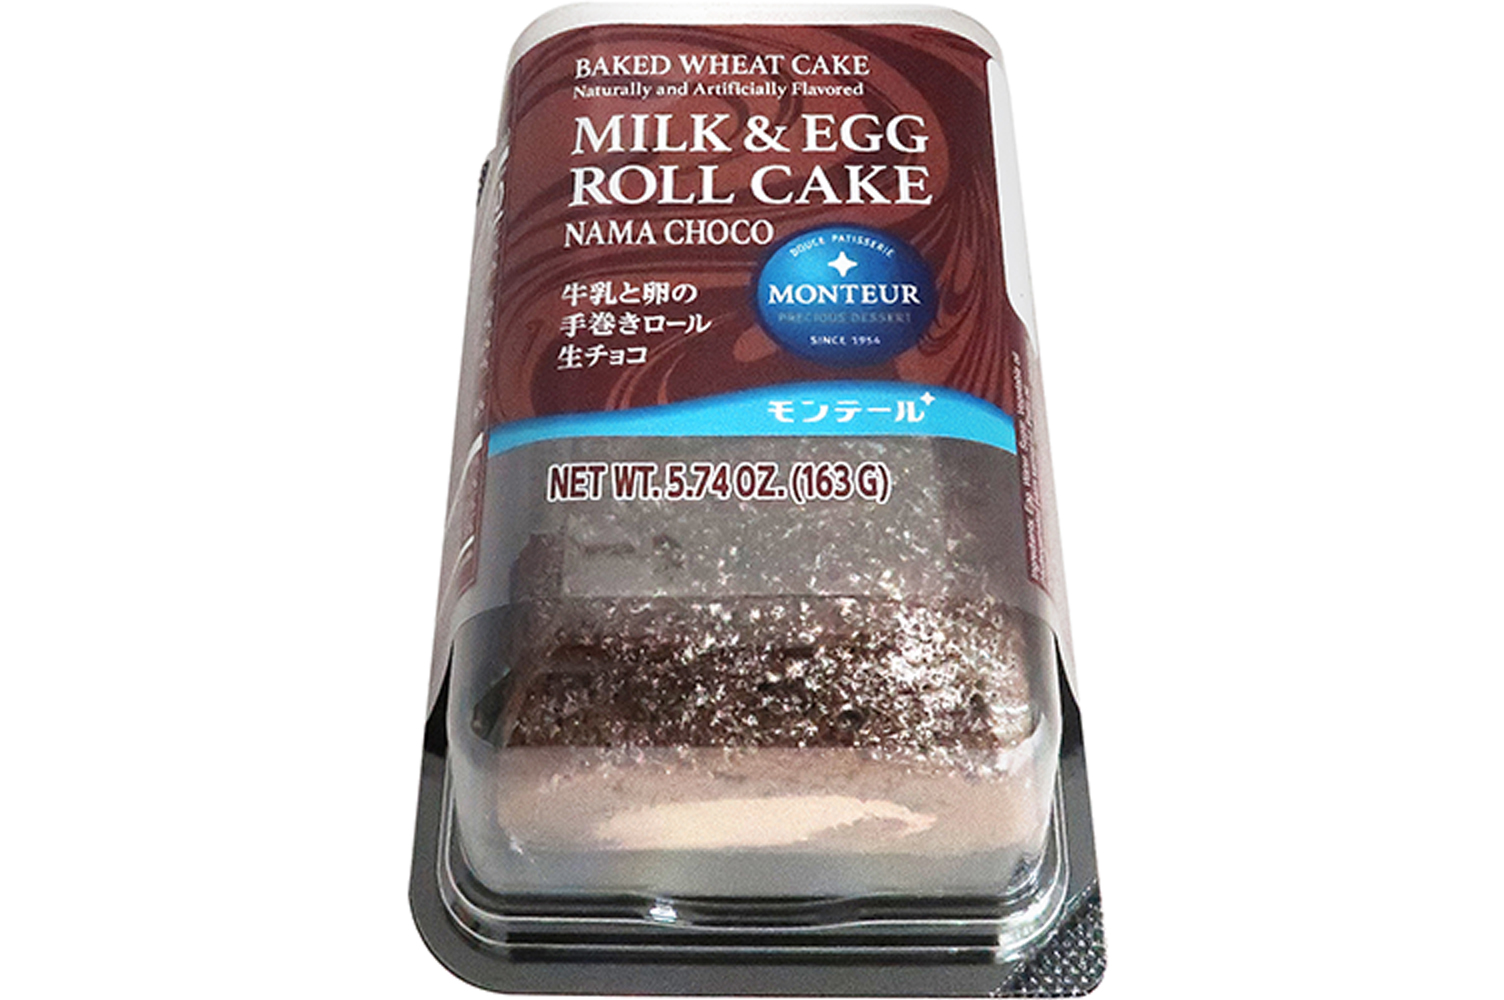 MILK & EGG ROLL CAKE NAMA CHOCO